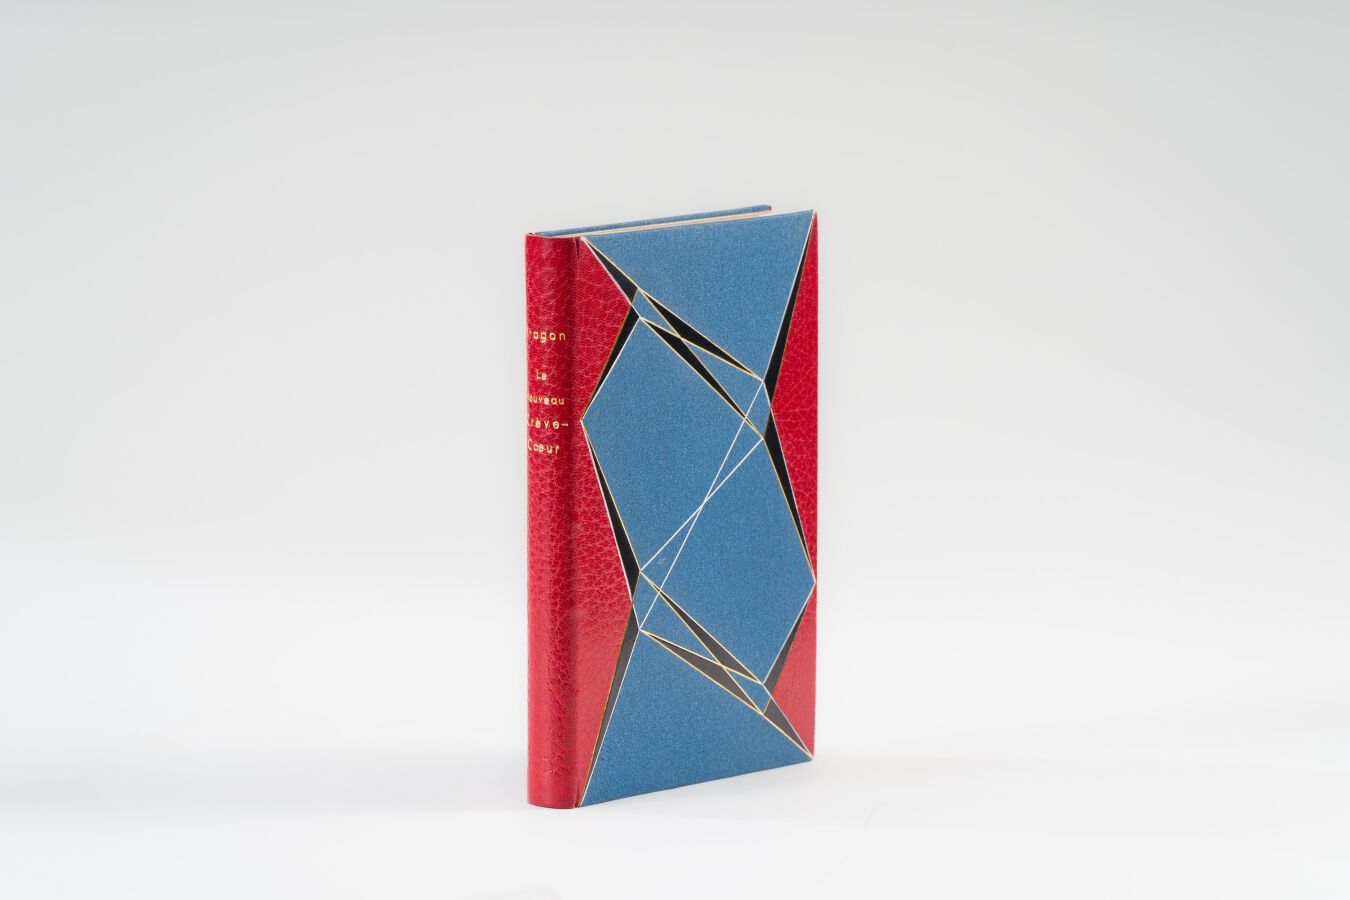 Null 25.阿拉贡（路易斯）。 
Le Nouveau crève-coeur.诗集。巴黎，Gallimard，1948年，12开本，红色摩洛哥文，作者和书&hellip;